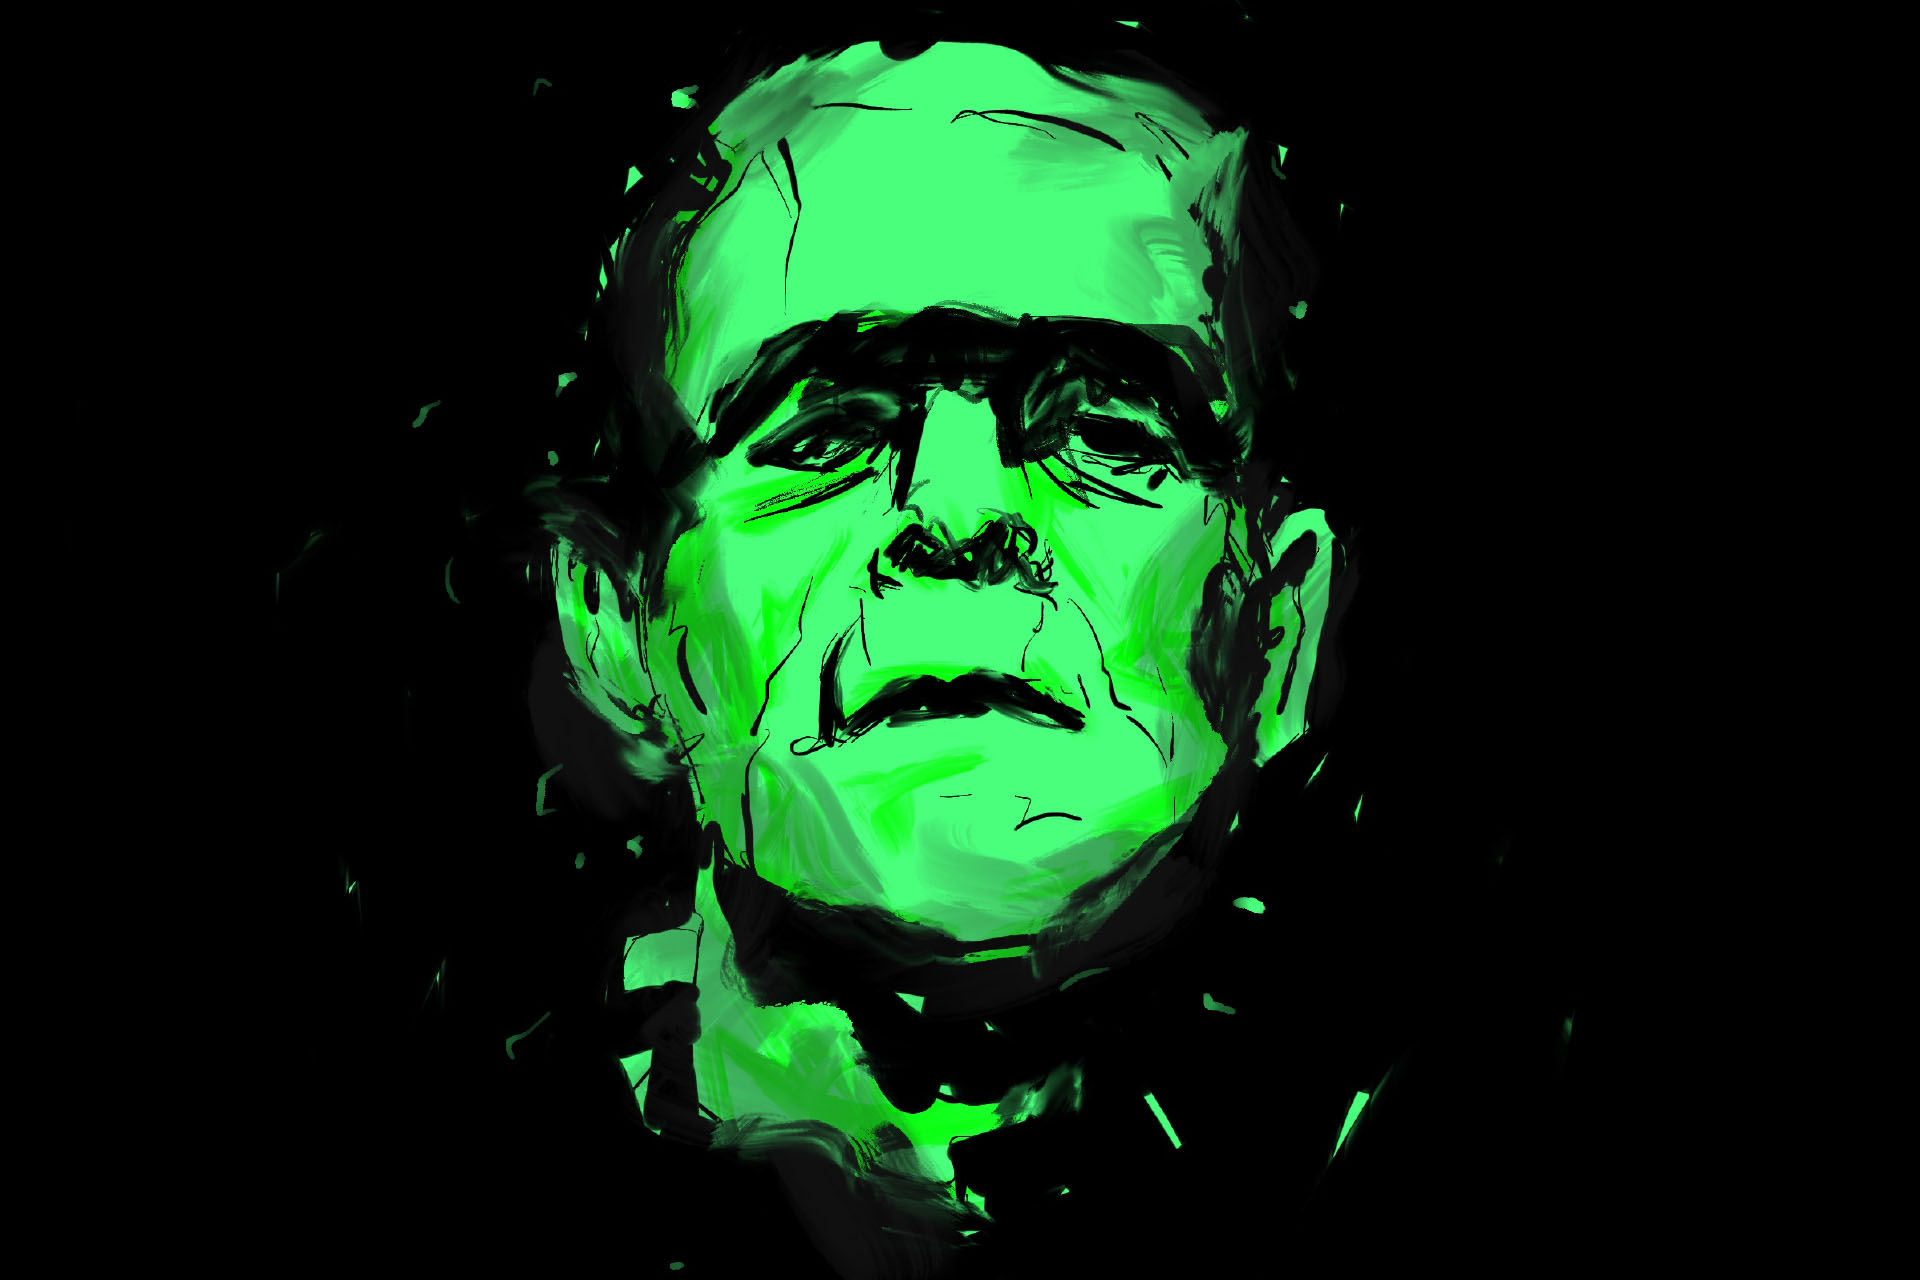 How human-centered designers prevent Frankenstein’s creature